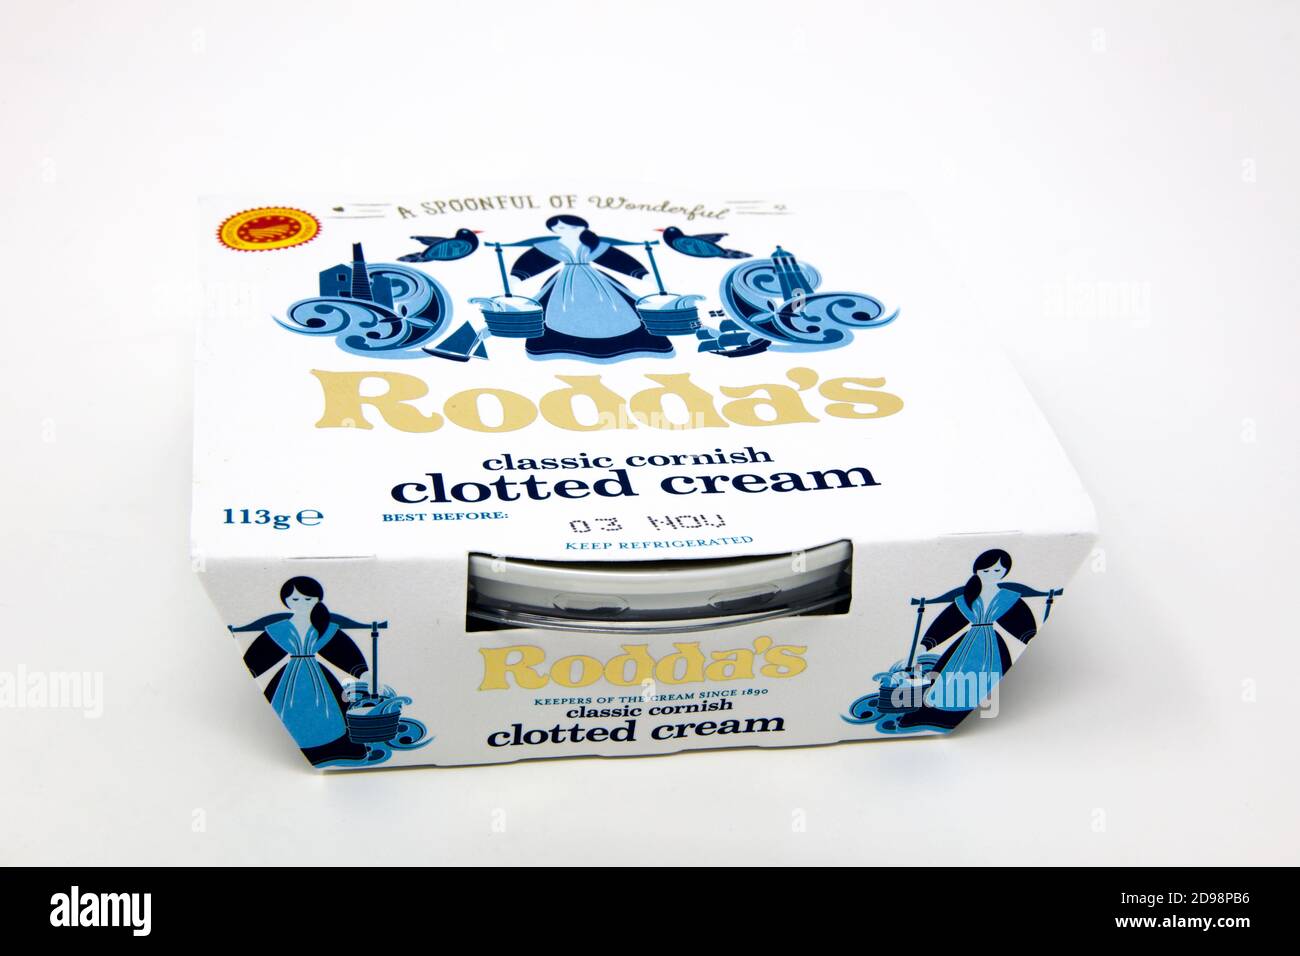 Rodda's Cornish Cloted Cream Stockfoto